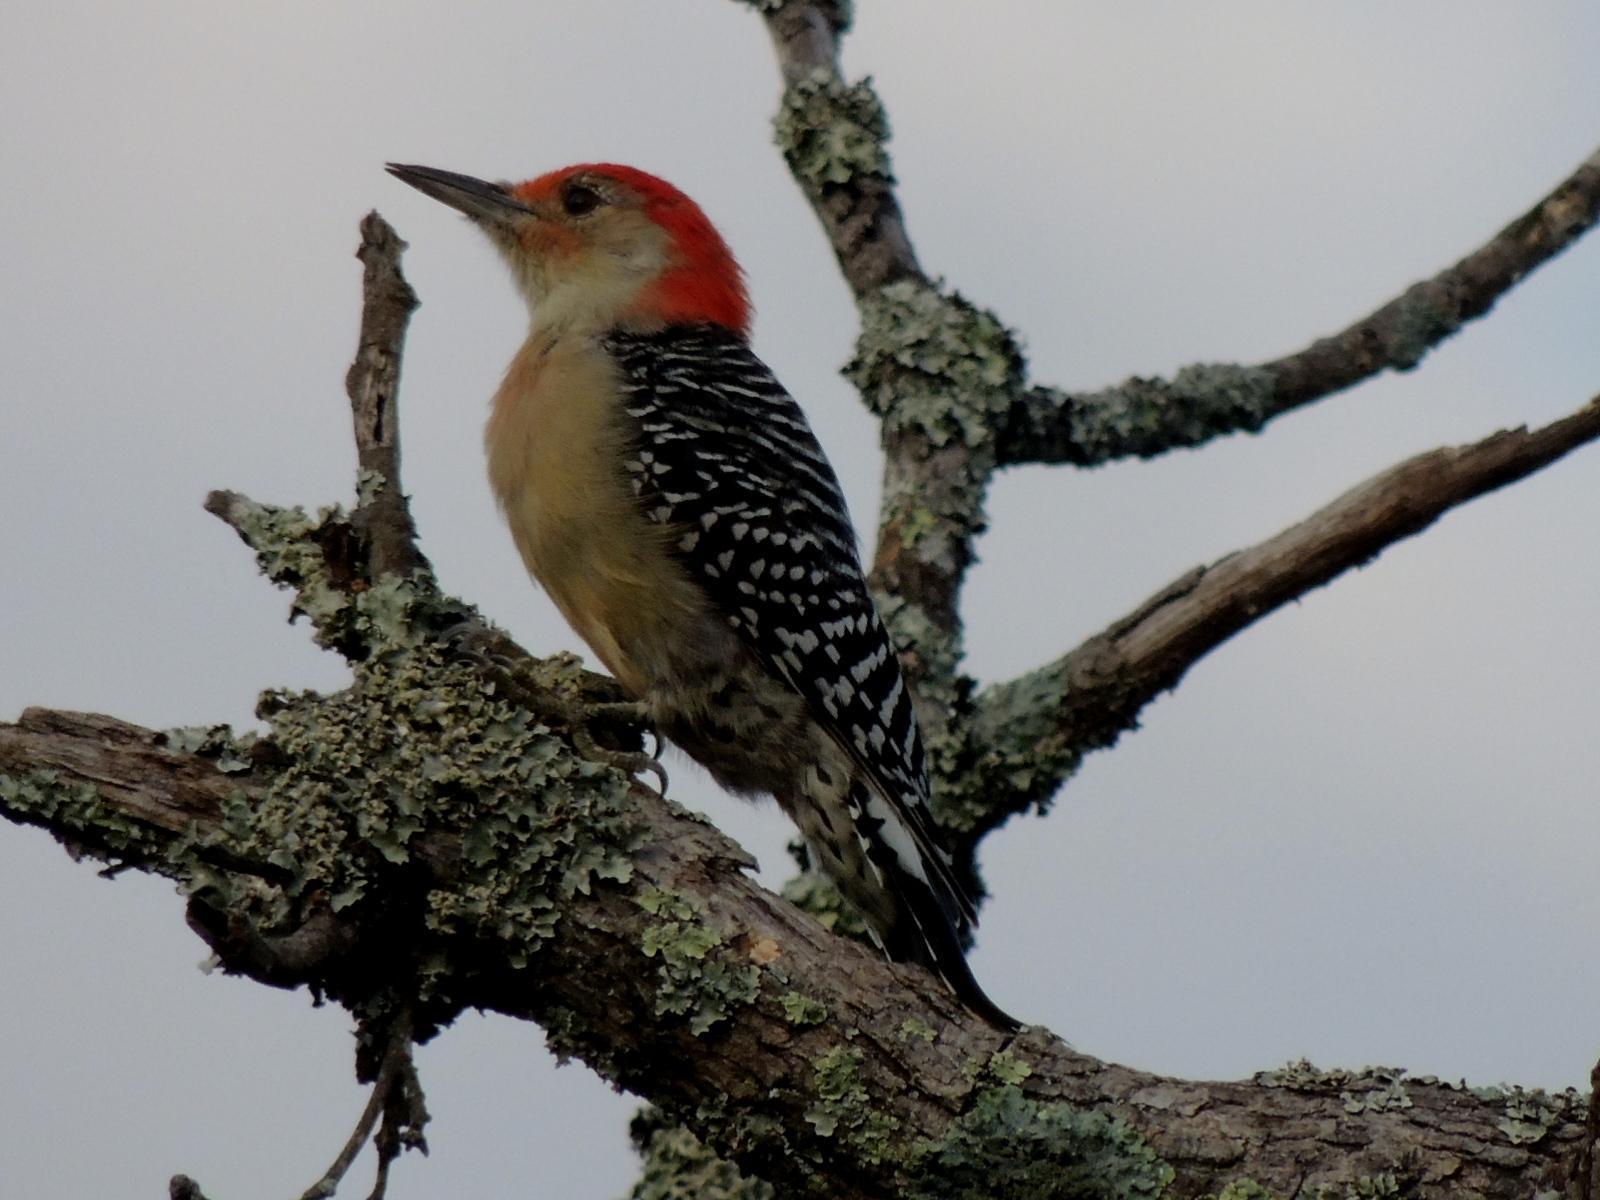 Red-bellied Woodpecker Photo by Tony Heindel